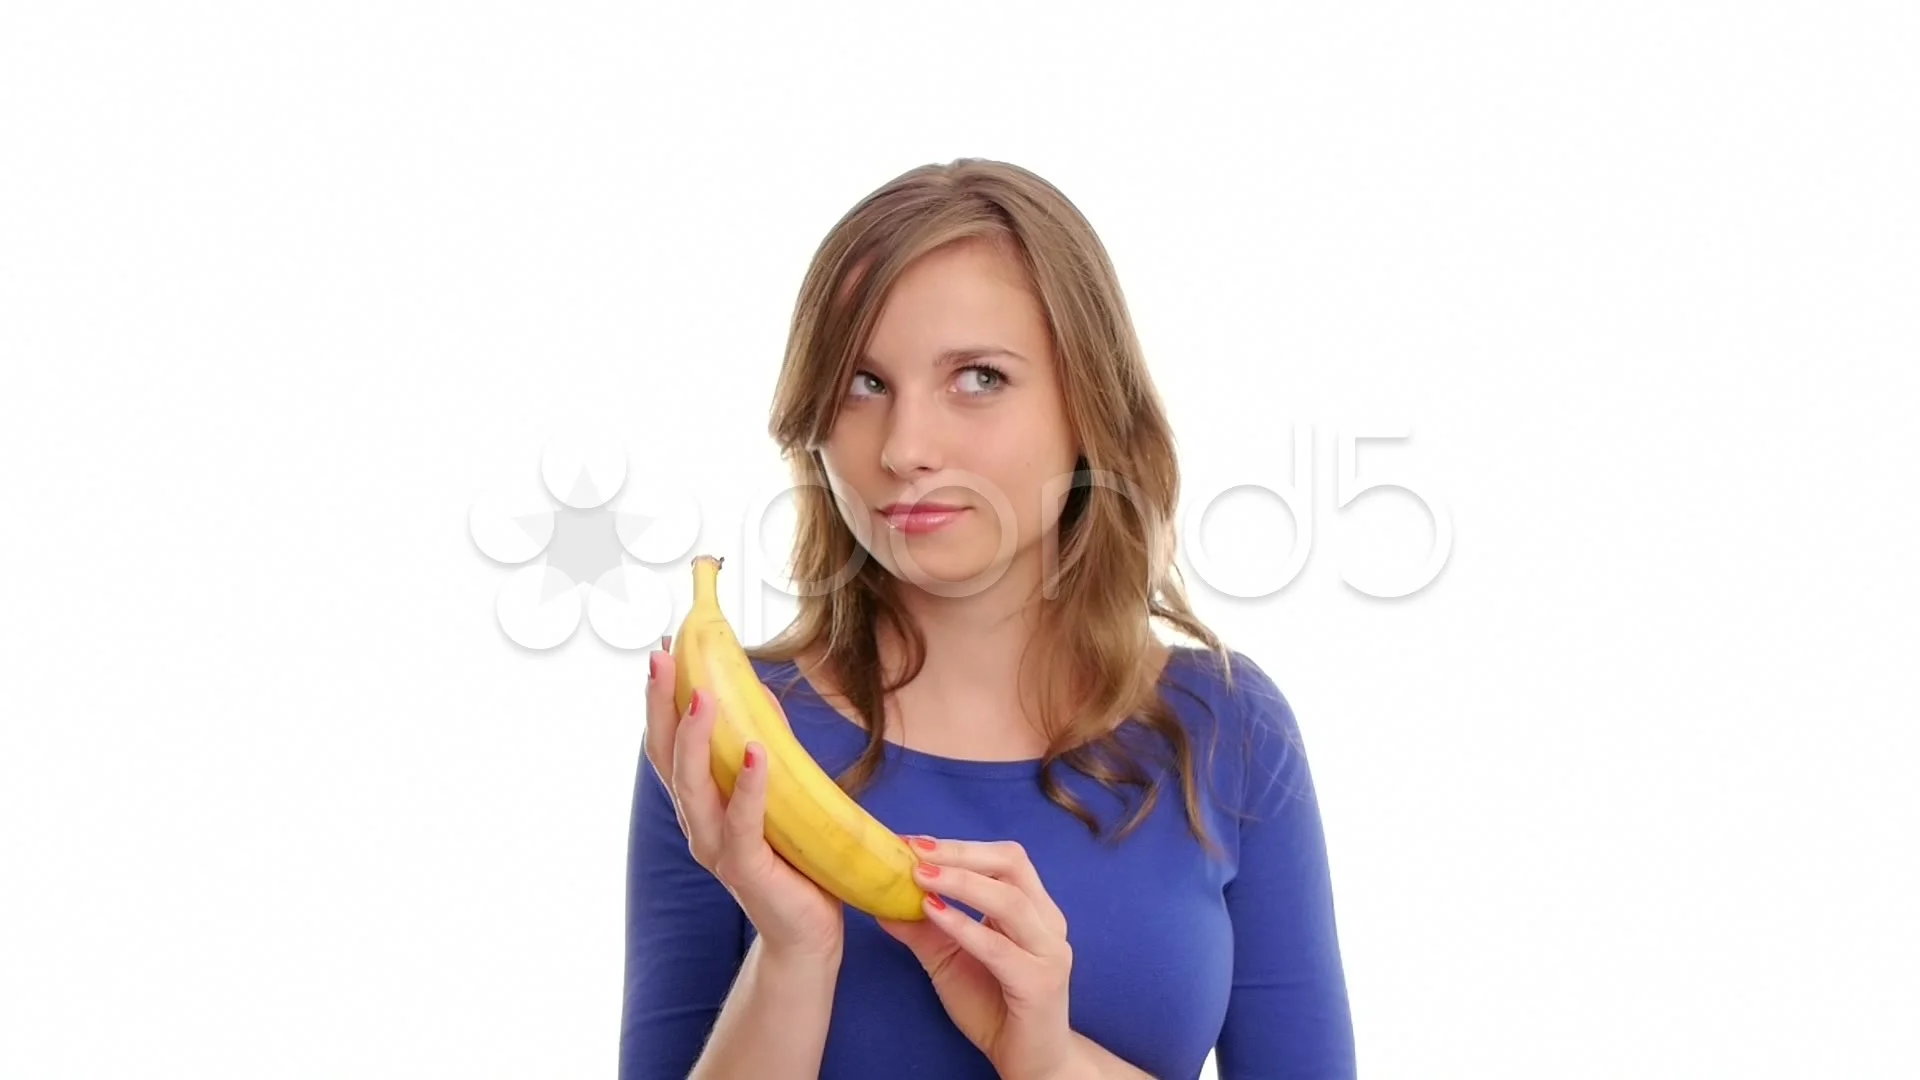 Eating bananas women 11 Unleashed